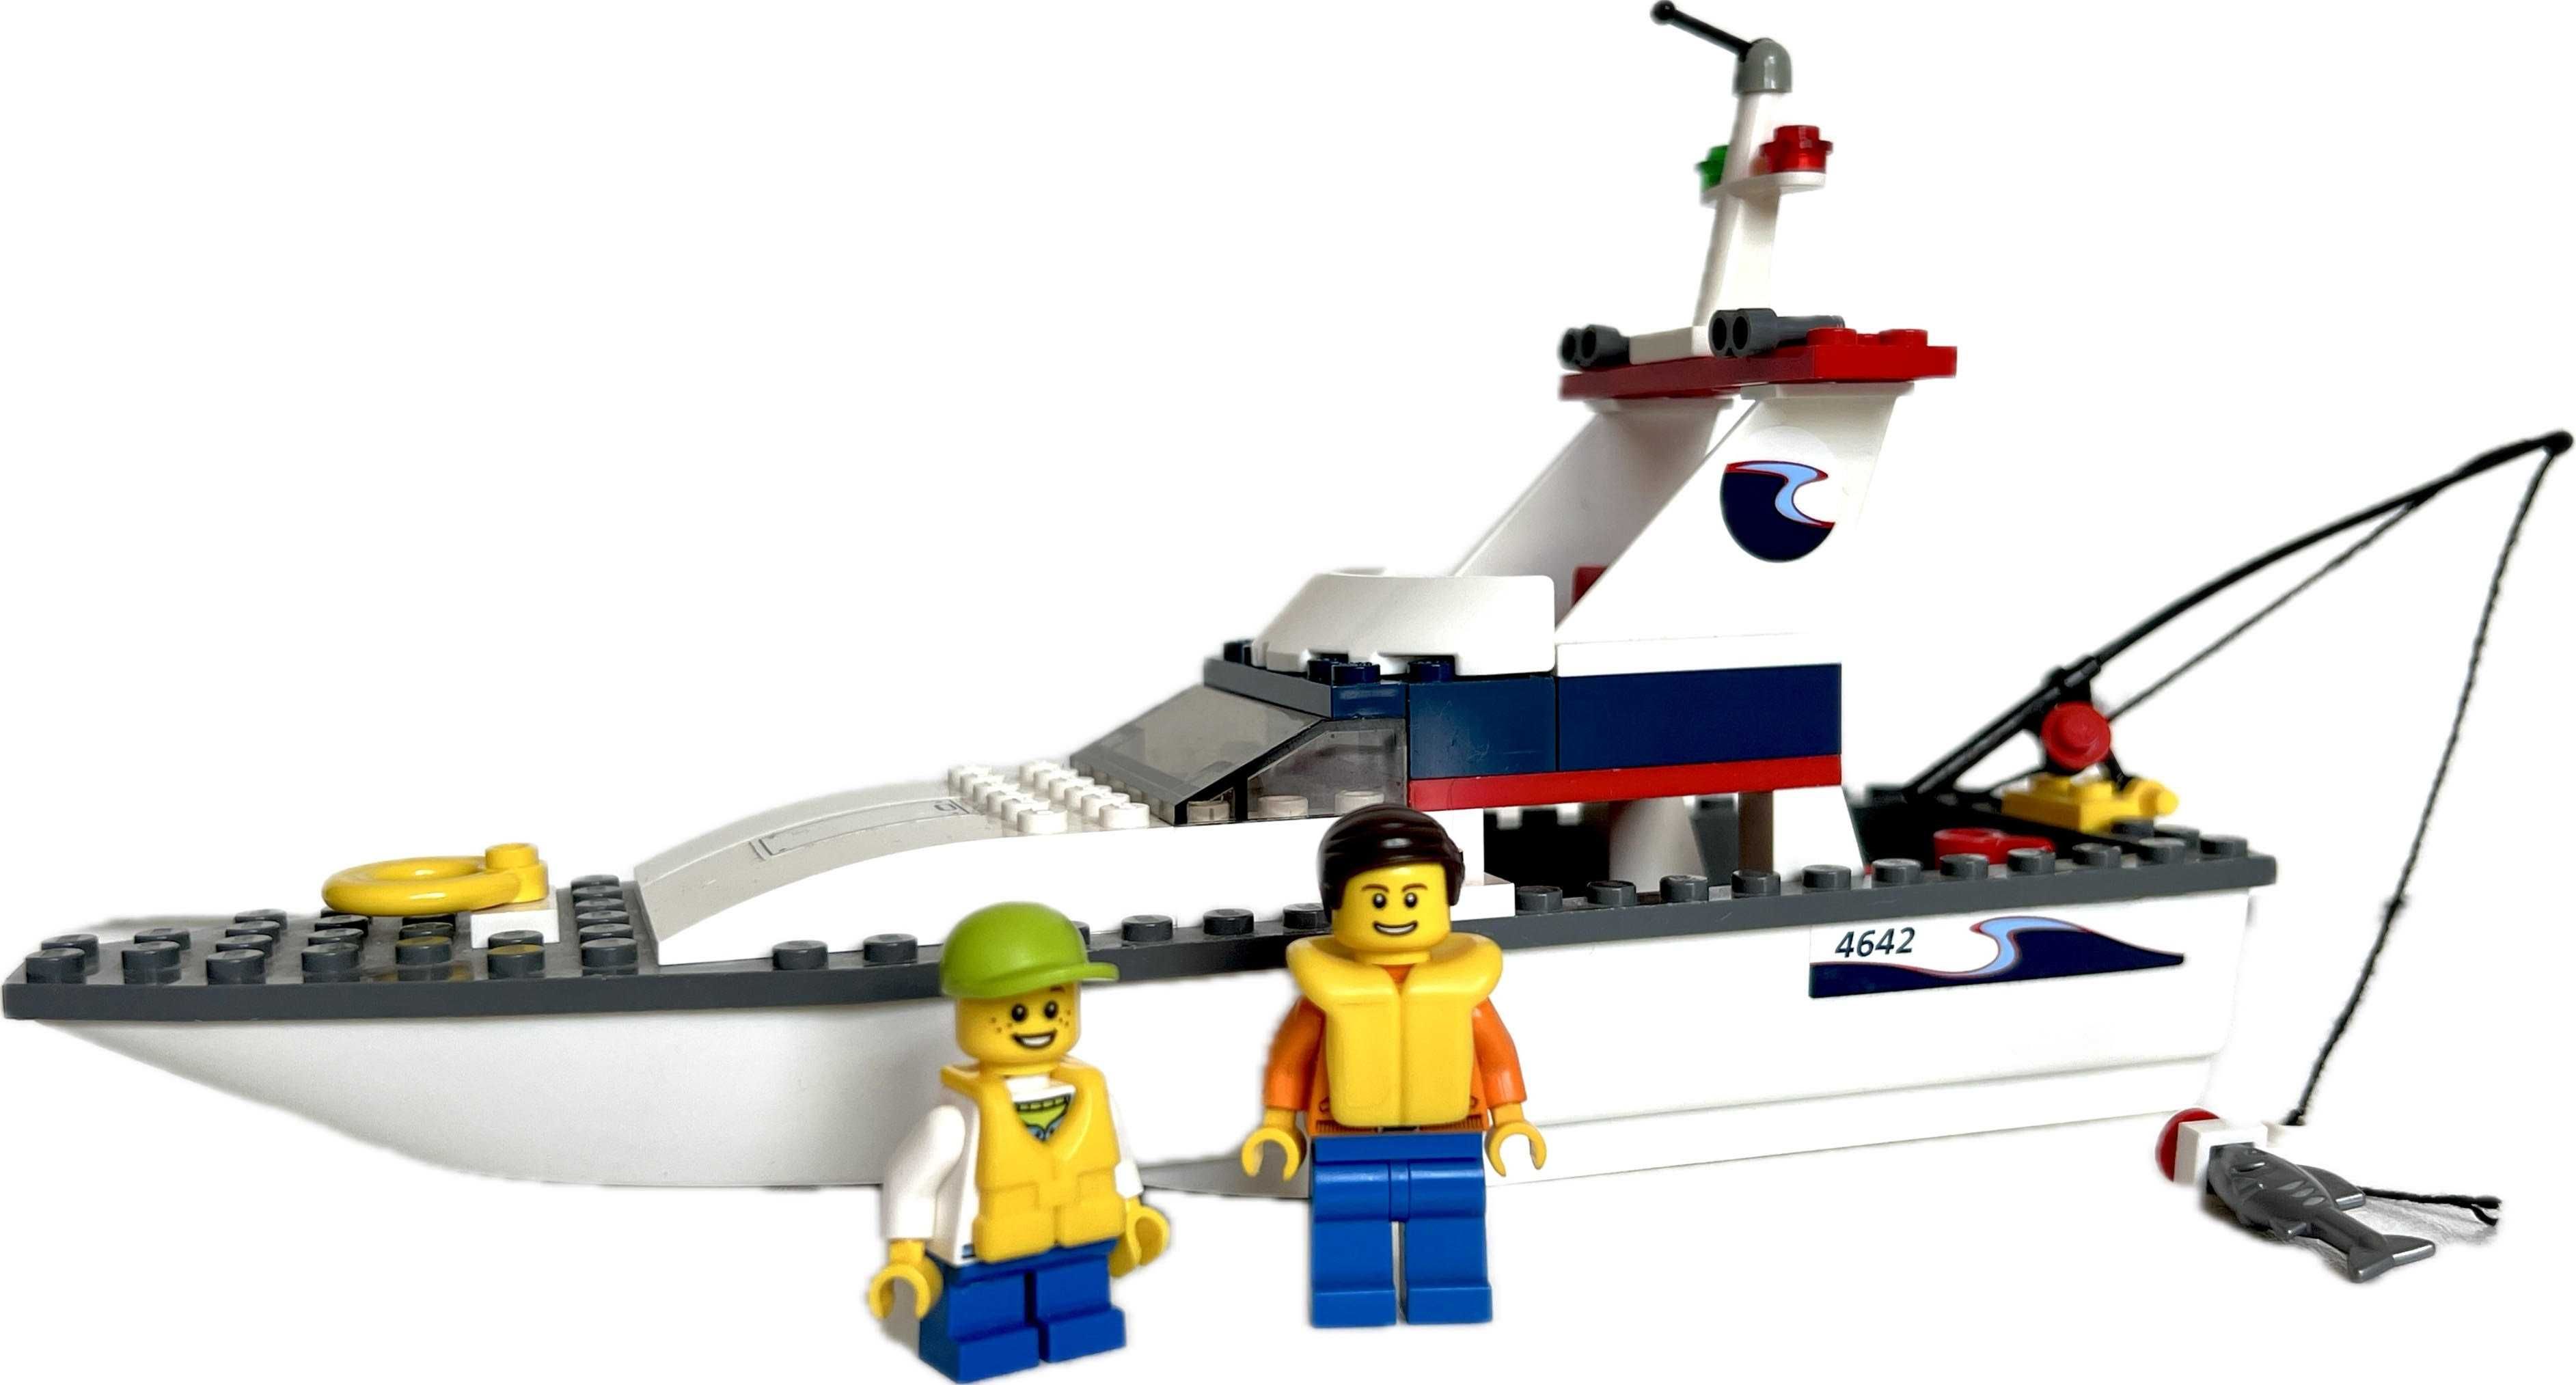 LEGO City 4642 Jacht motorowy